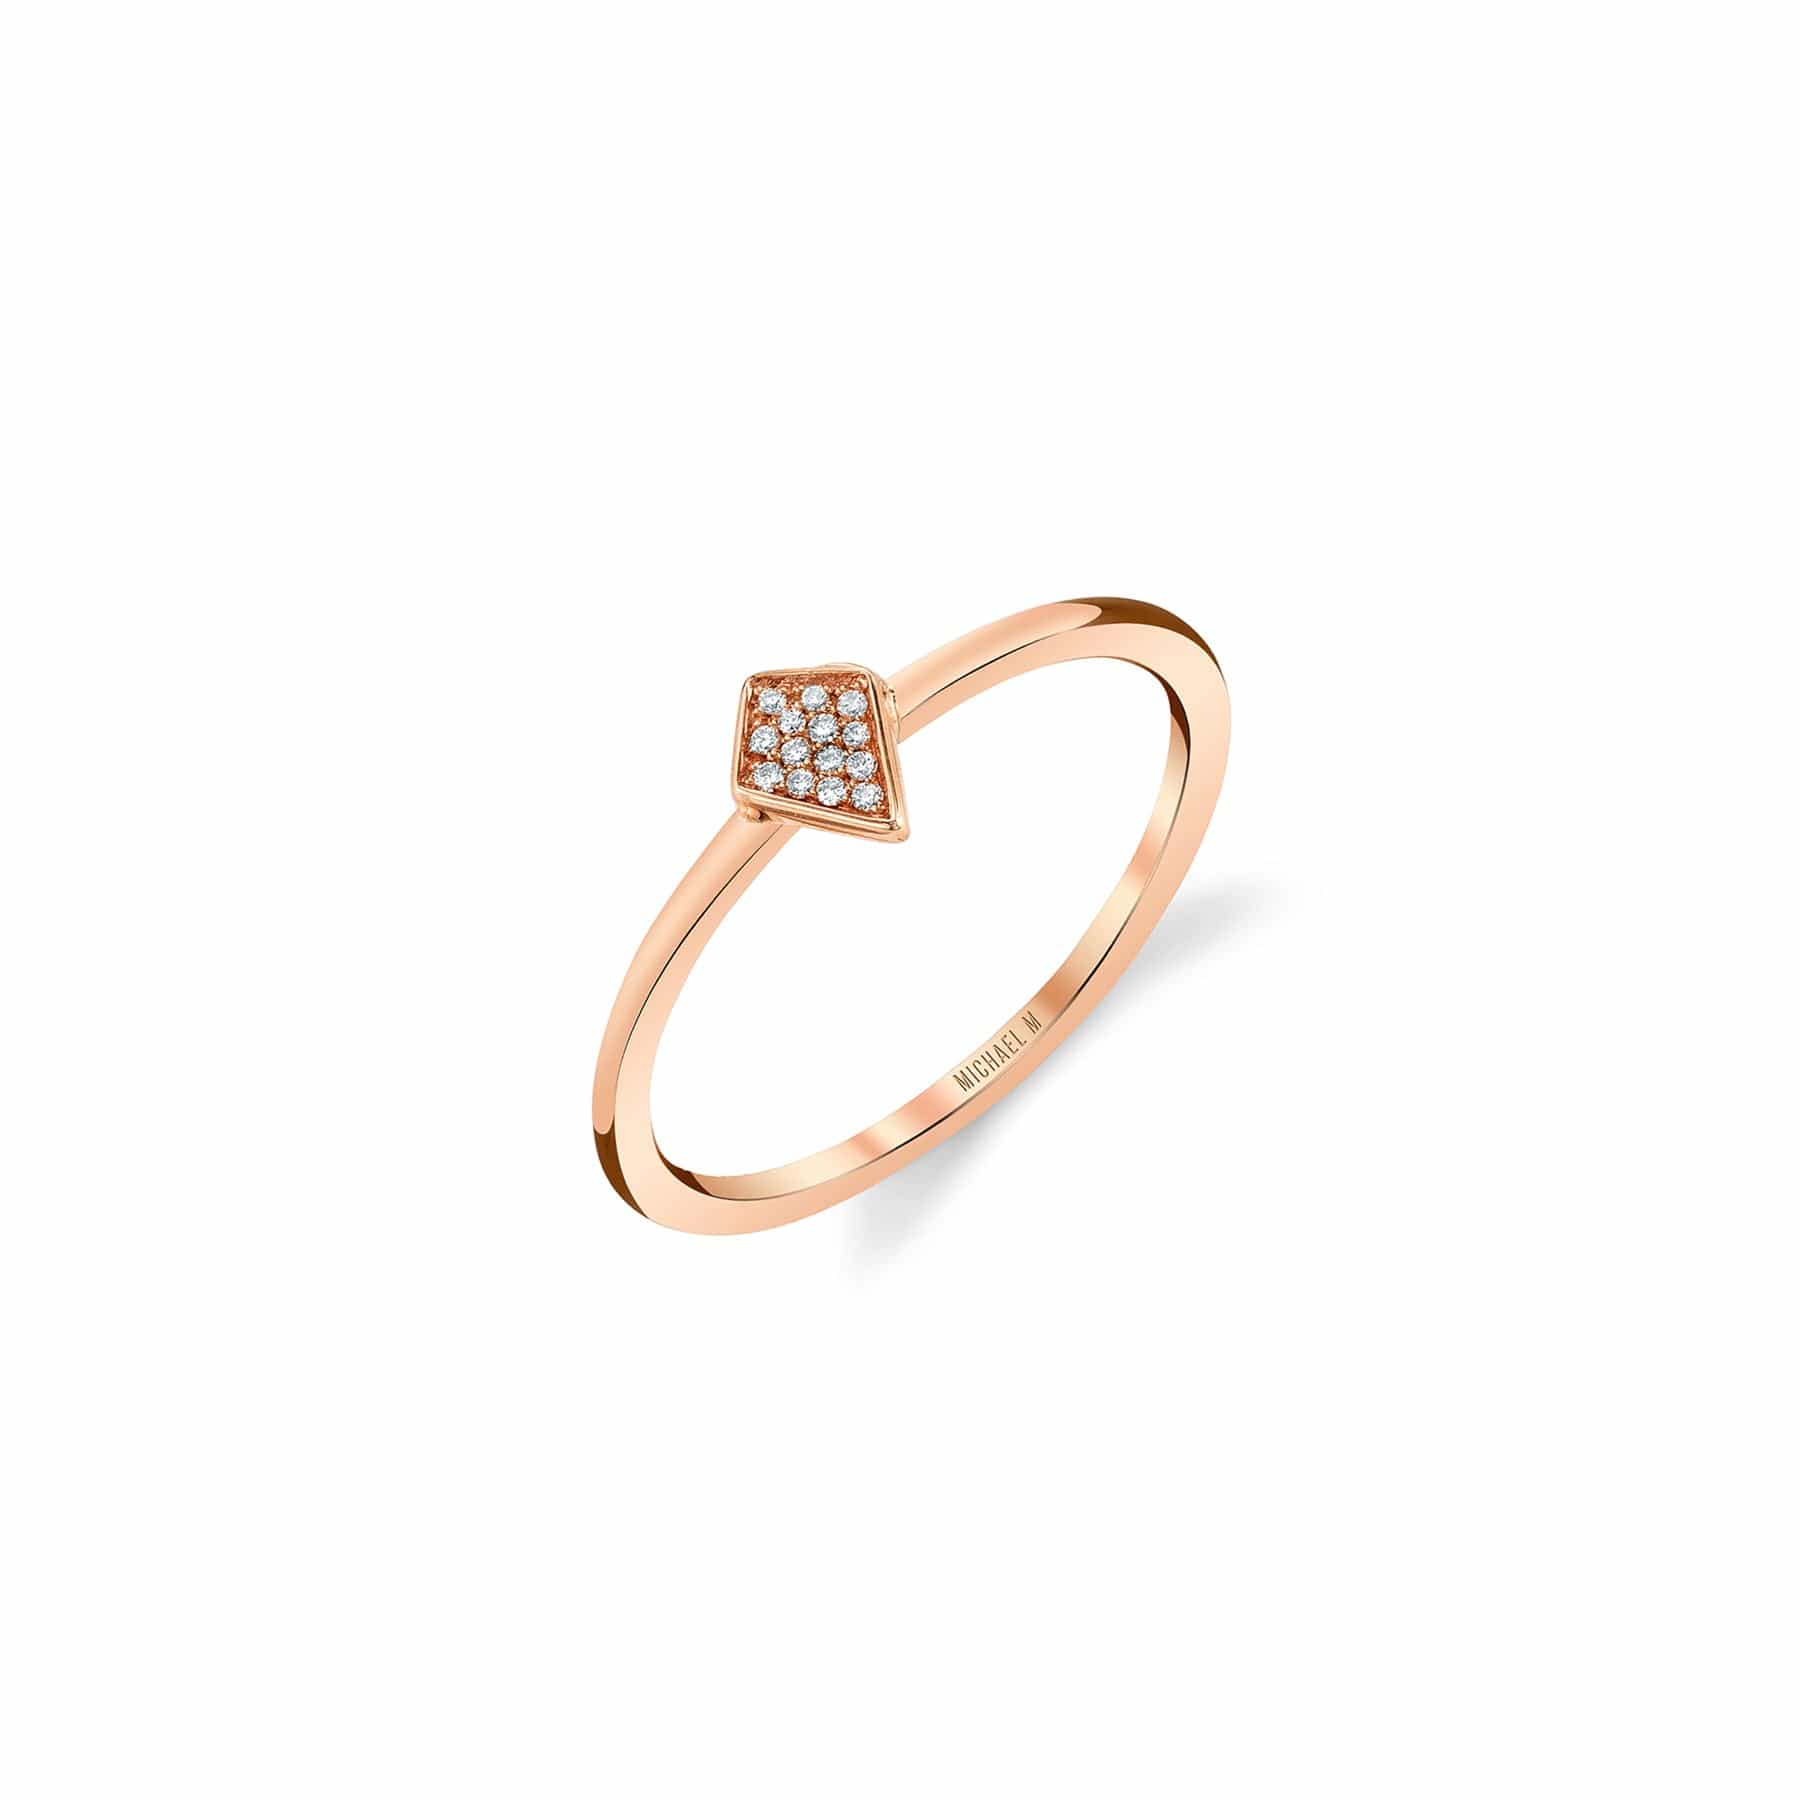 MICHAEL M Fashion Rings 14K Rose Gold / 4 Micro Pavé Diamond Kite Ring F297-RG4